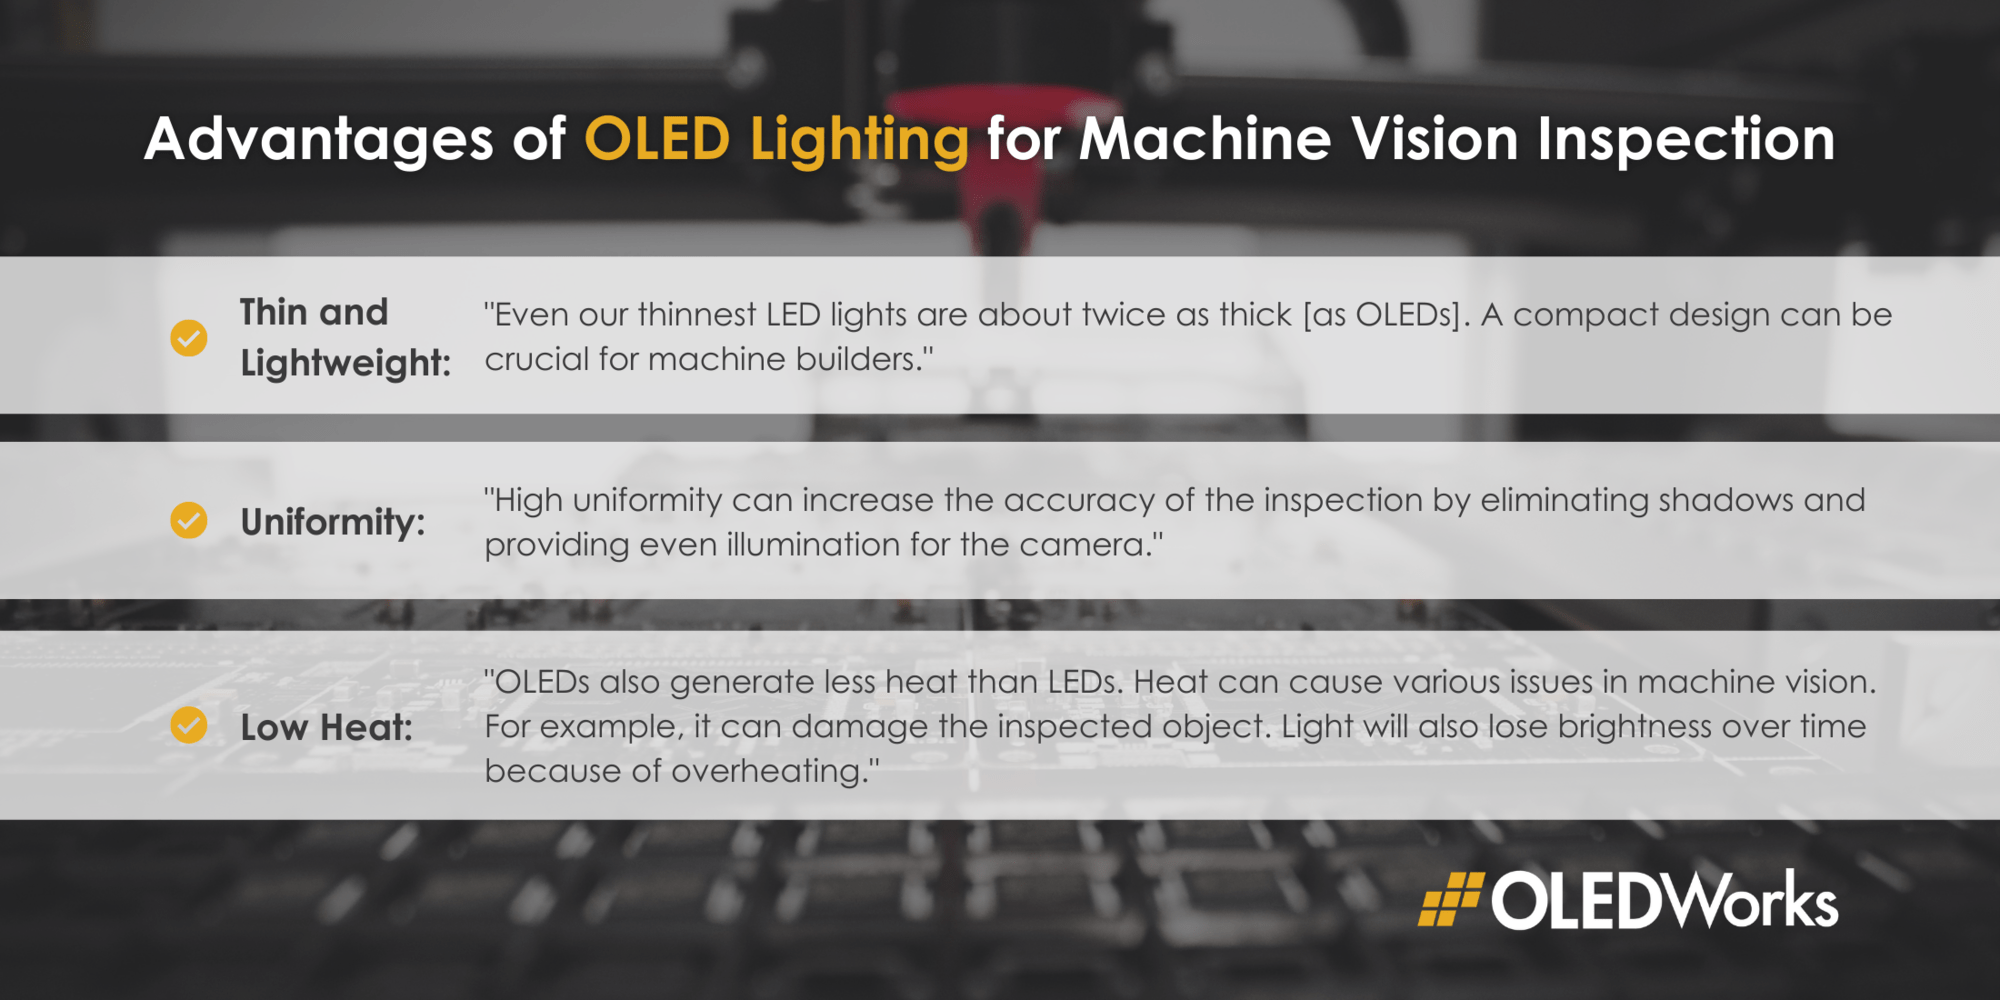 OLED lighting benefits for machine vision